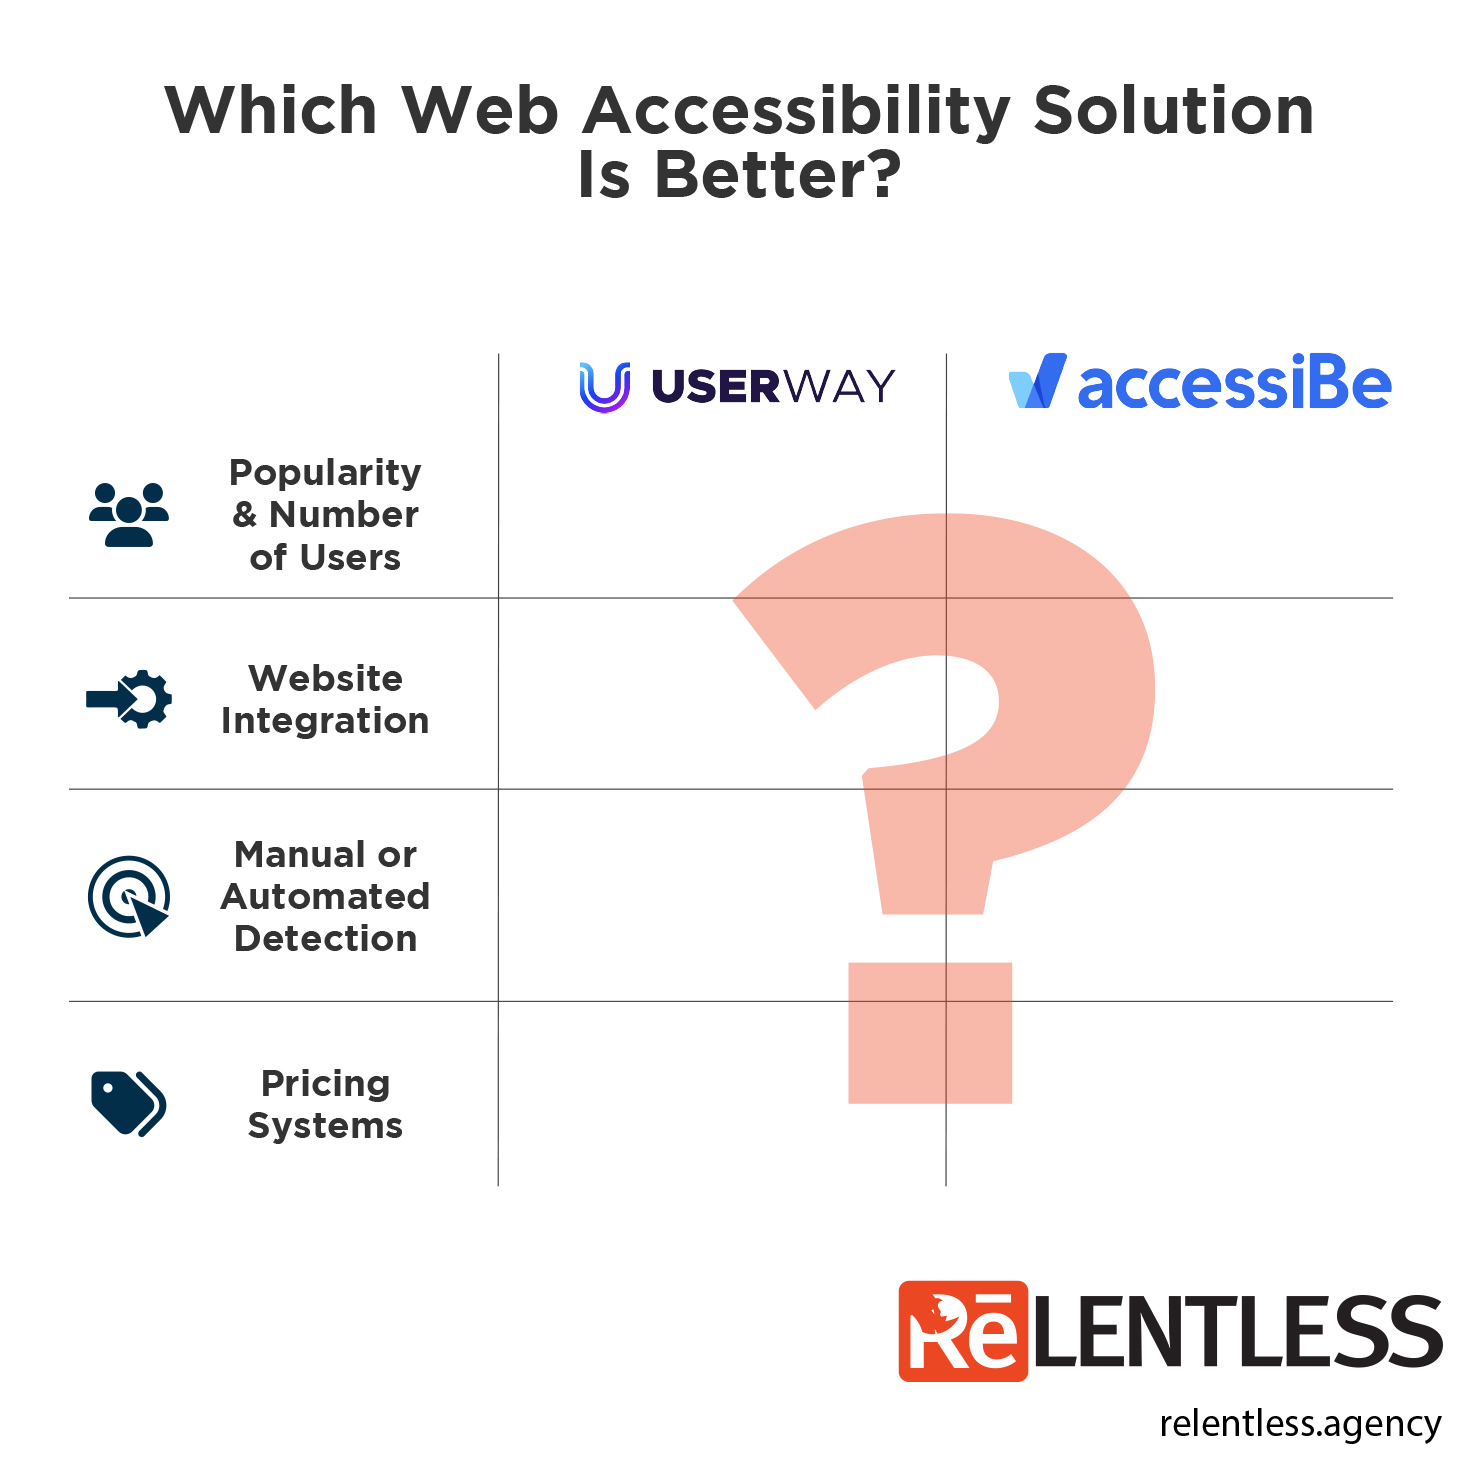 userway vs. accessibe